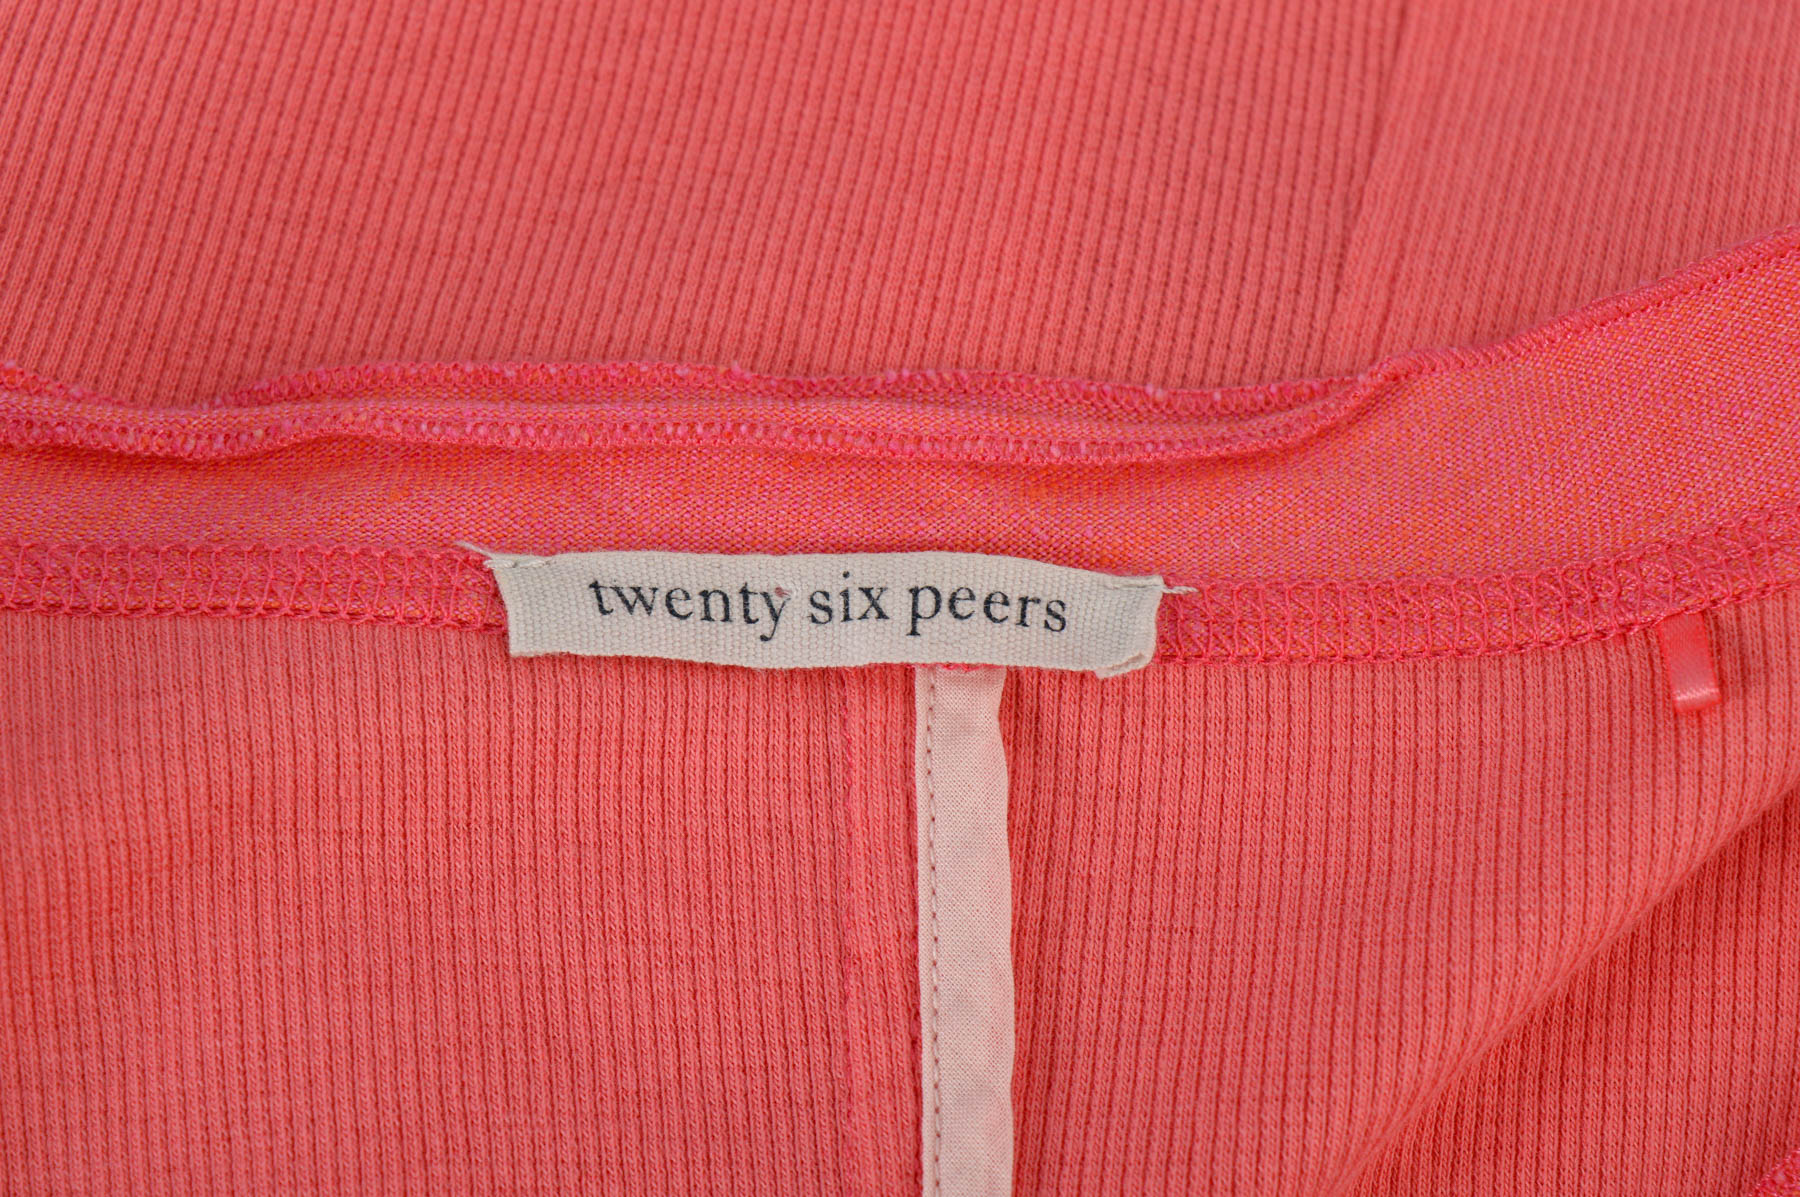 Cardigan / Jachetă de damă - Twenty six peers - 2